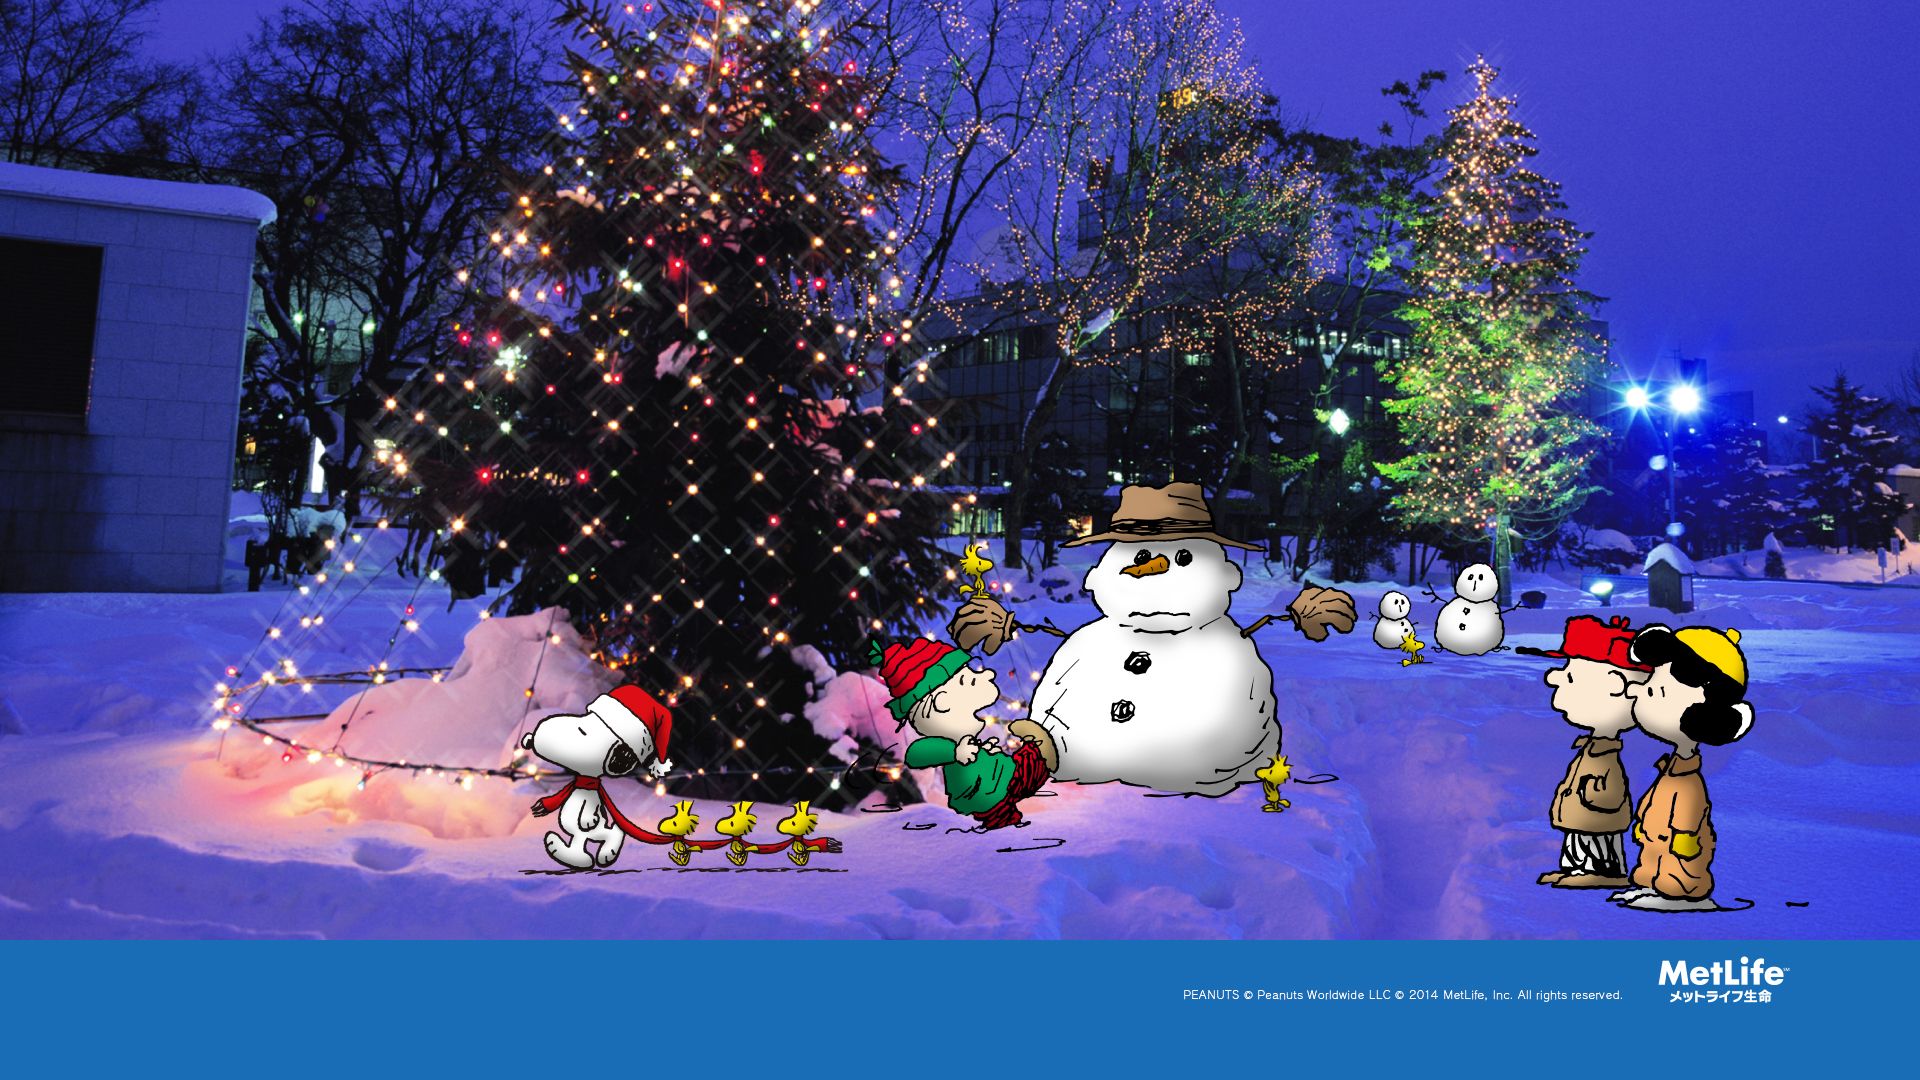 snoopy christmas wallpaper,christmas tree,snowman,winter,snow,christmas